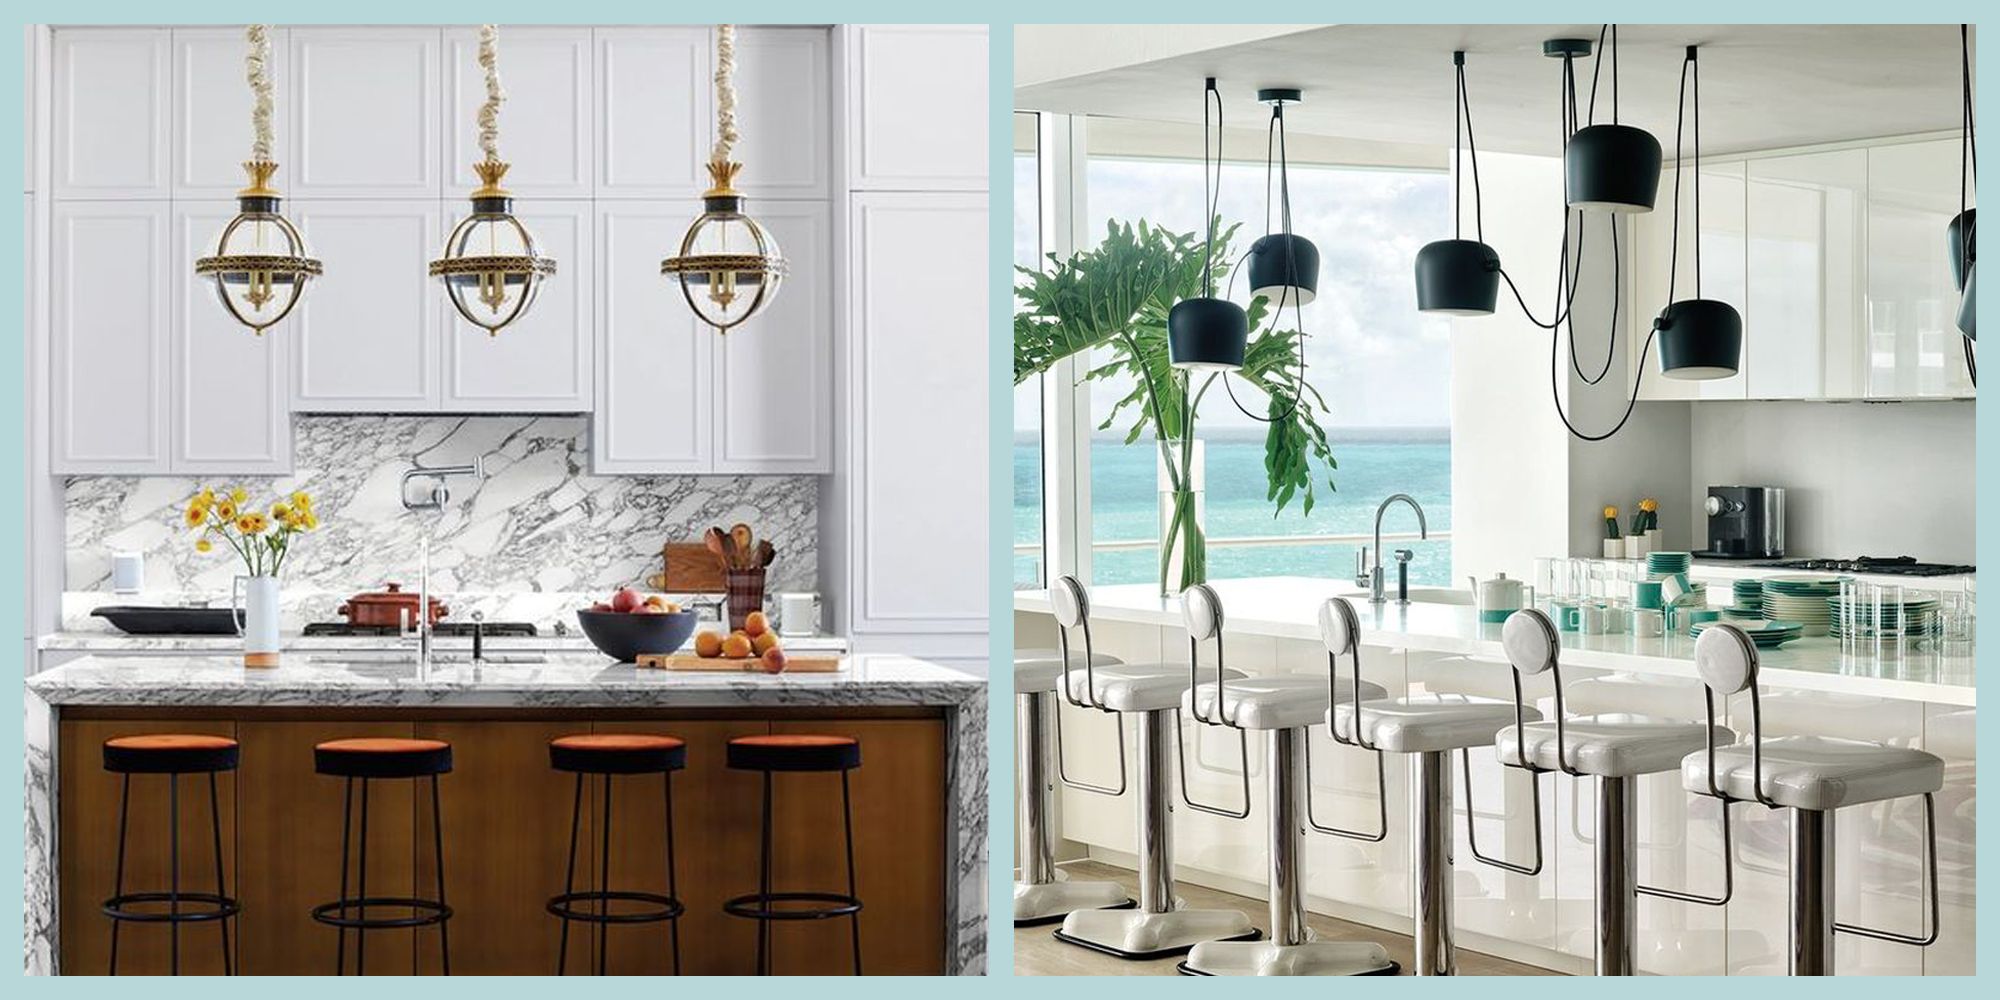 55 Inspiring Modern Kitchens Contemporary Kitchen Ideas 2020,Office Building Interior Design Ideas